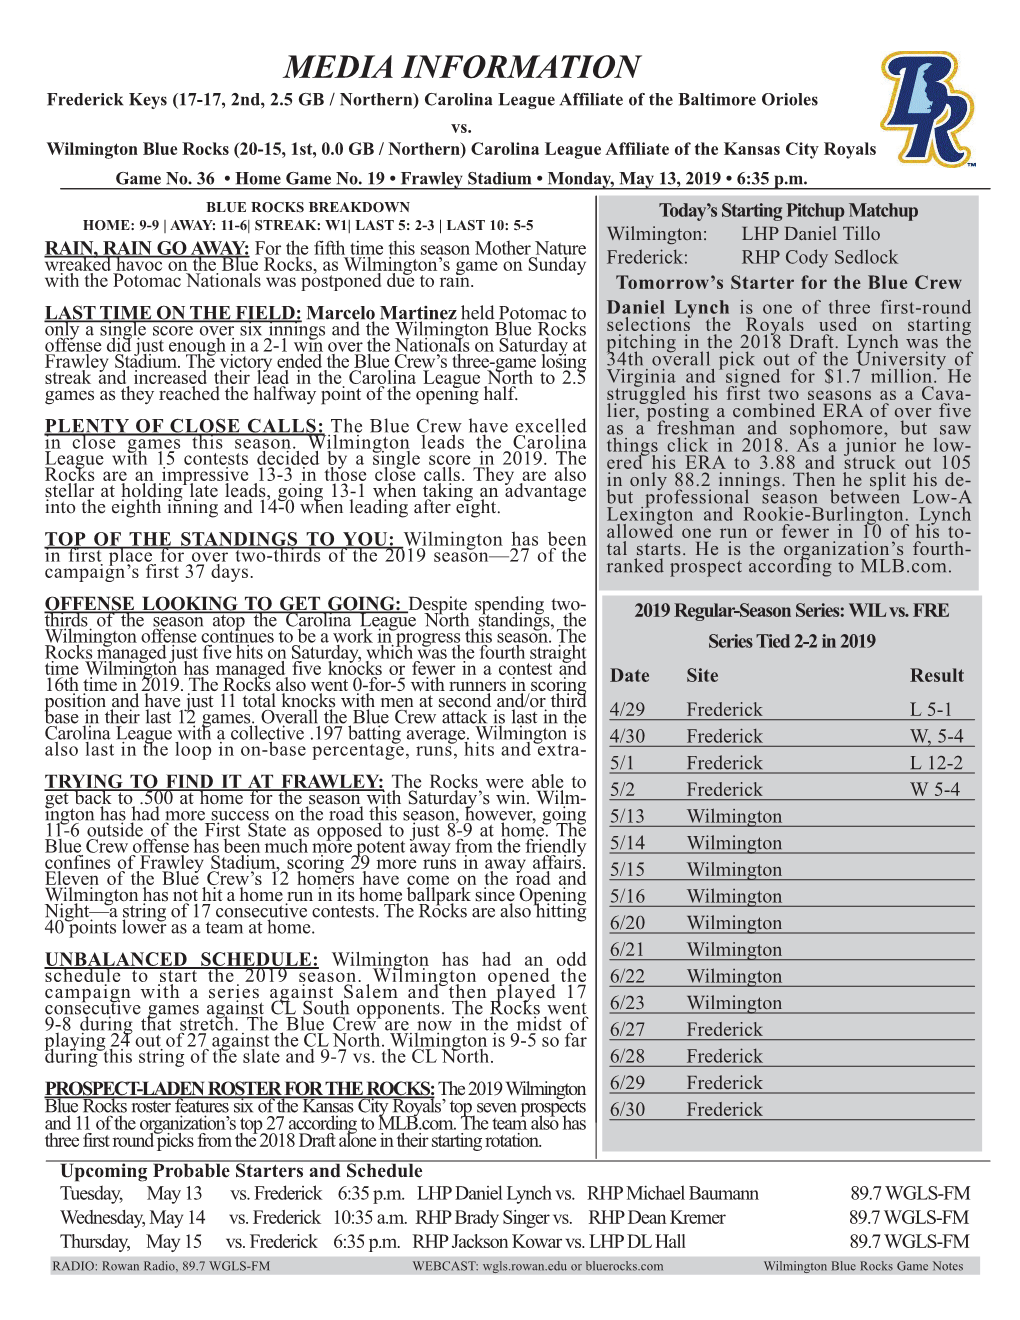 MEDIA INFORMATION Frederick Keys (17-17, 2Nd, 2.5 GB / Northern) Carolina League Affiliate of the Baltimore Orioles Vs